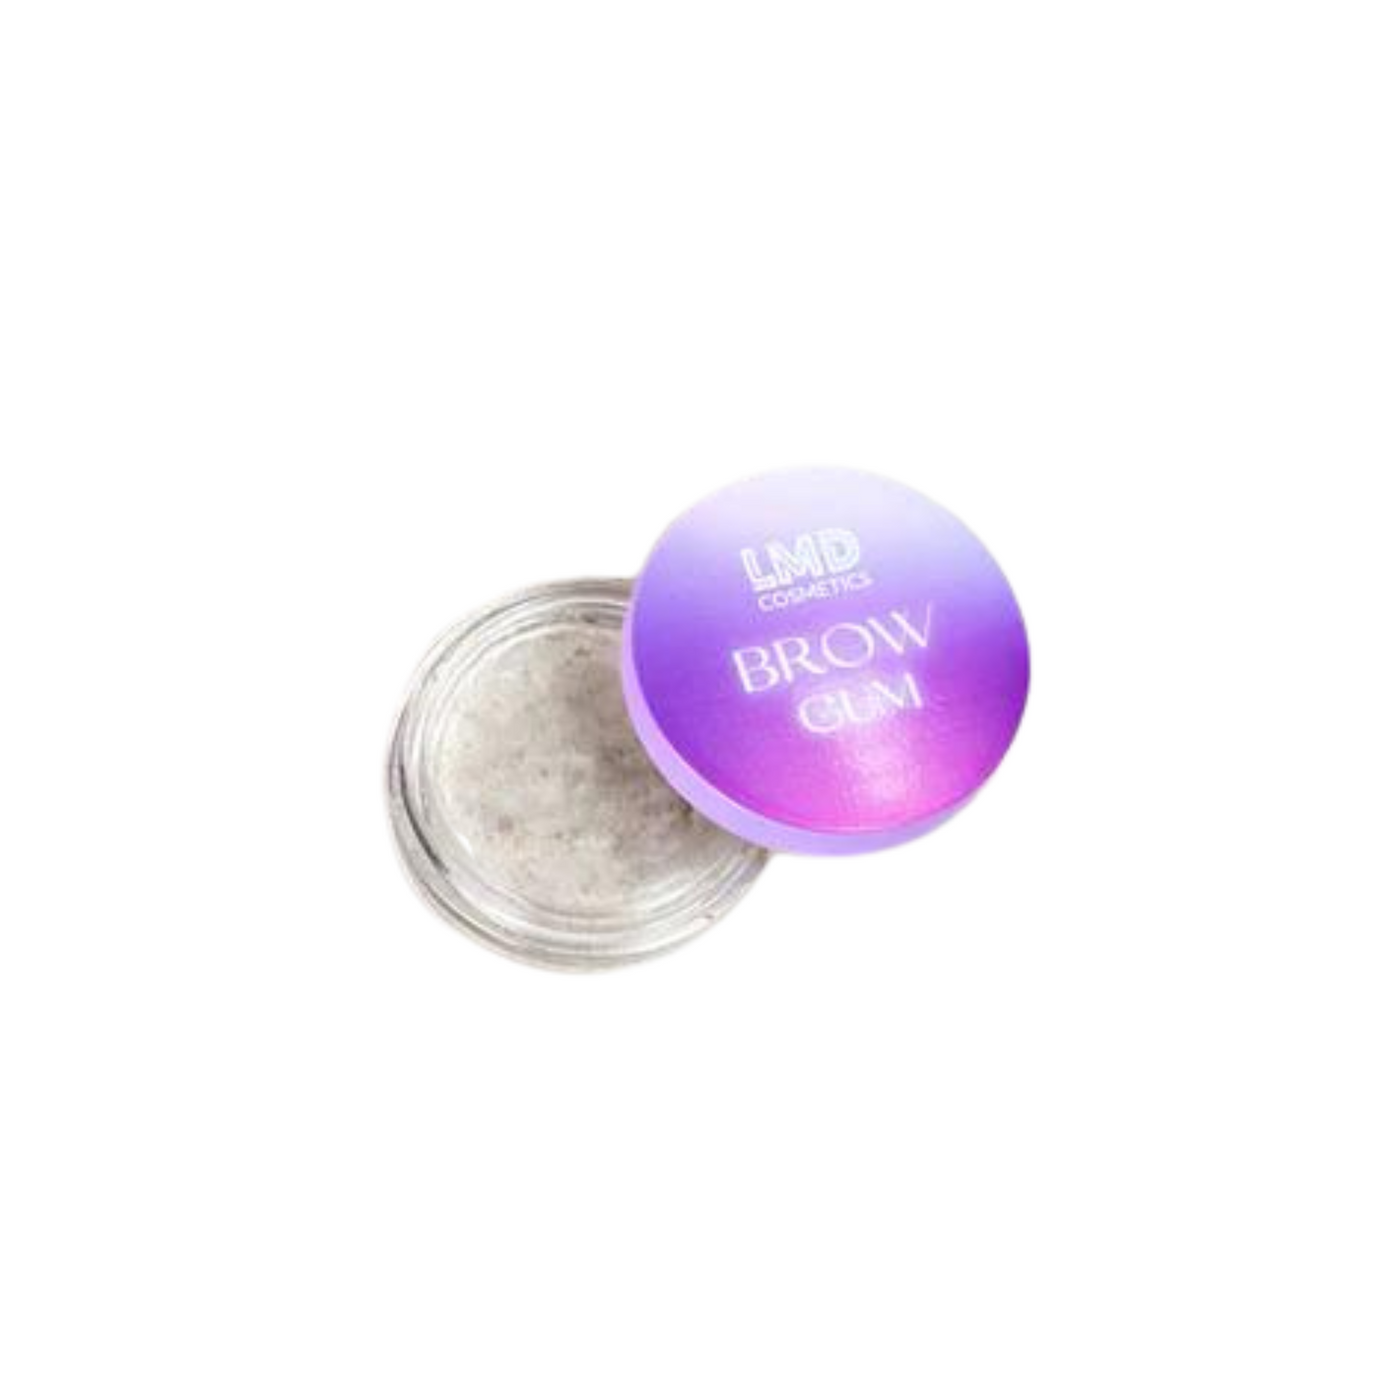 LMD Cosmetics - Brow Gum